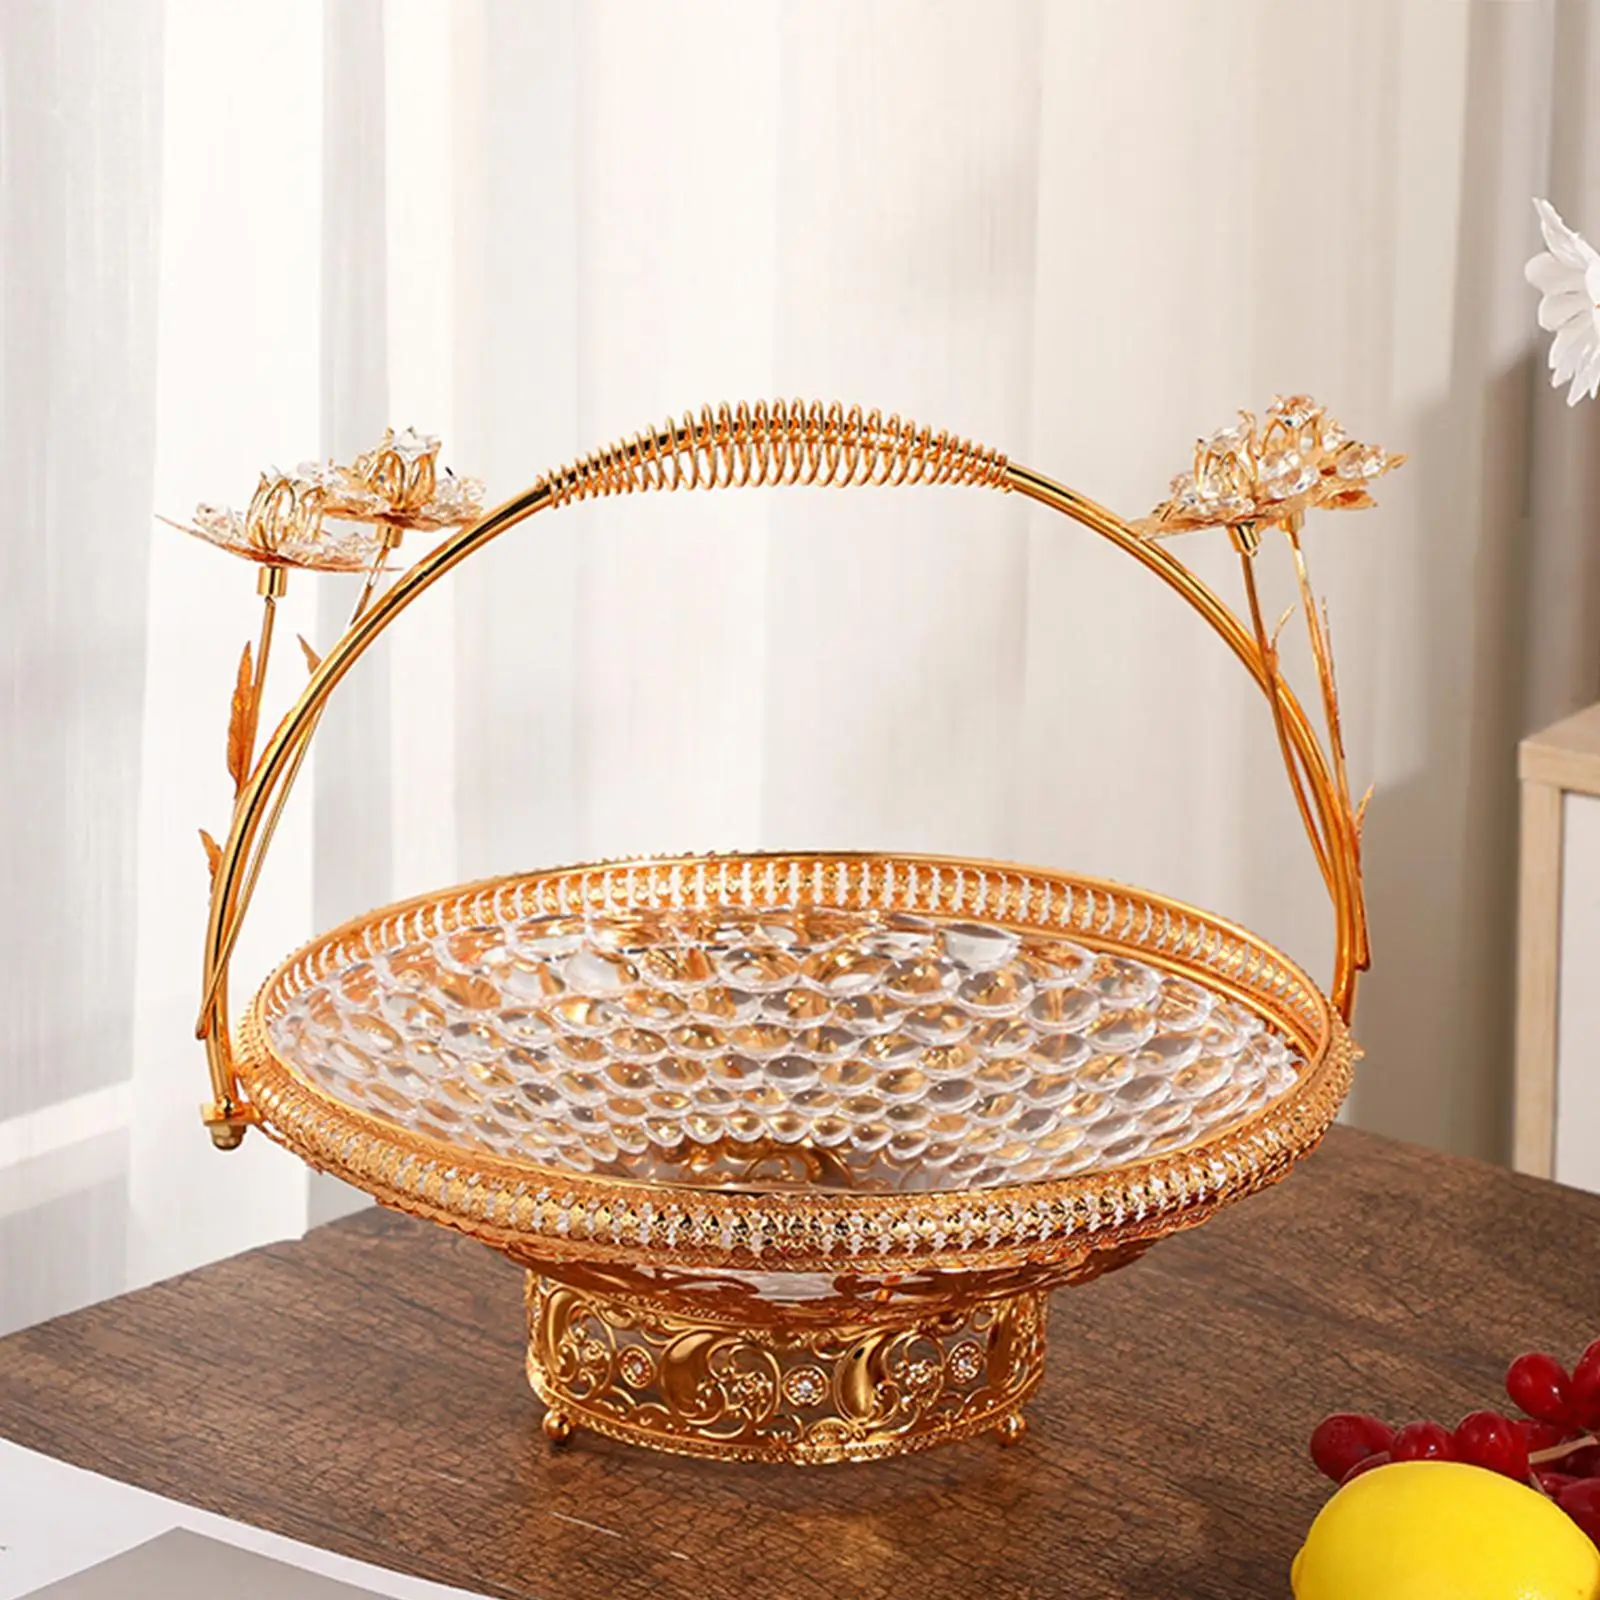 European Style Fruit Storage Basket European Style Multipurpose Decorative Serving Tray for Candy Dessert bread Banquet